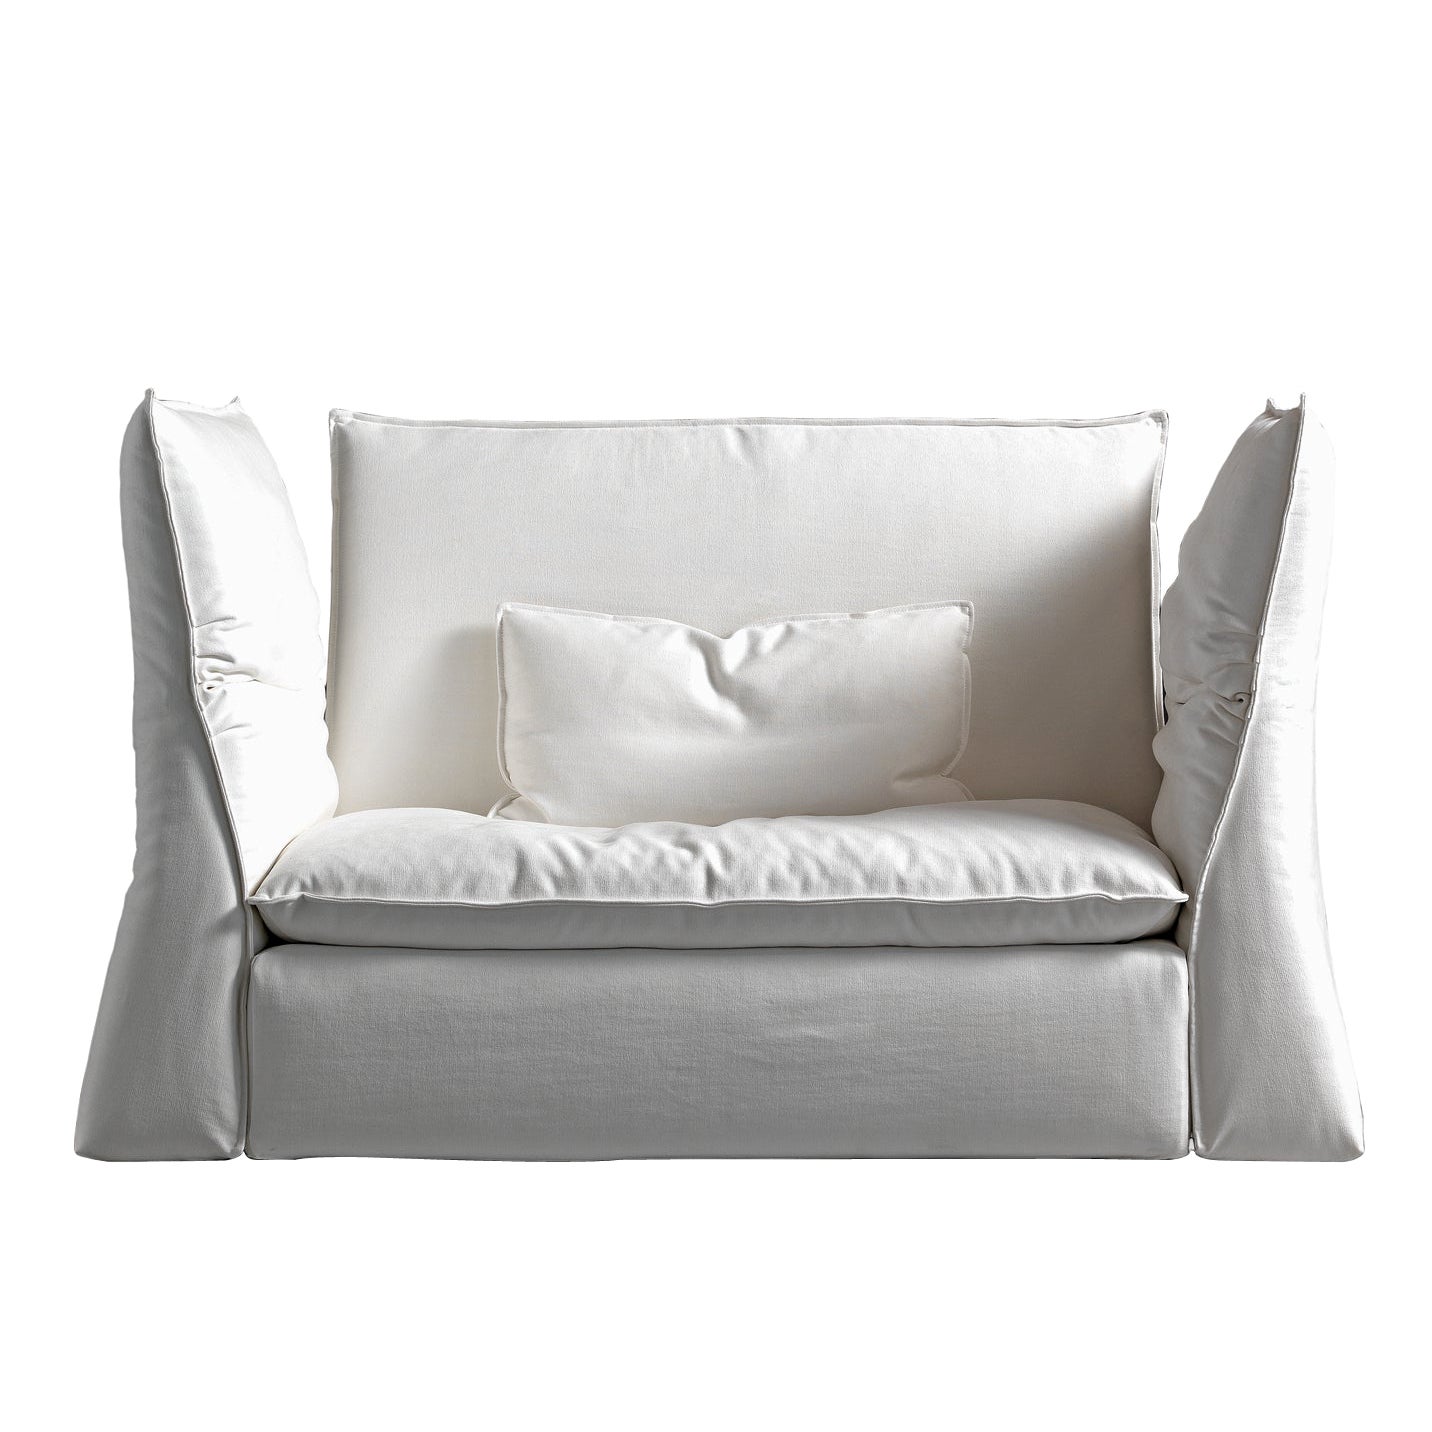 Les Femmes Medium Armchair in Byblos White Upholstery by Giuseppe Viganò